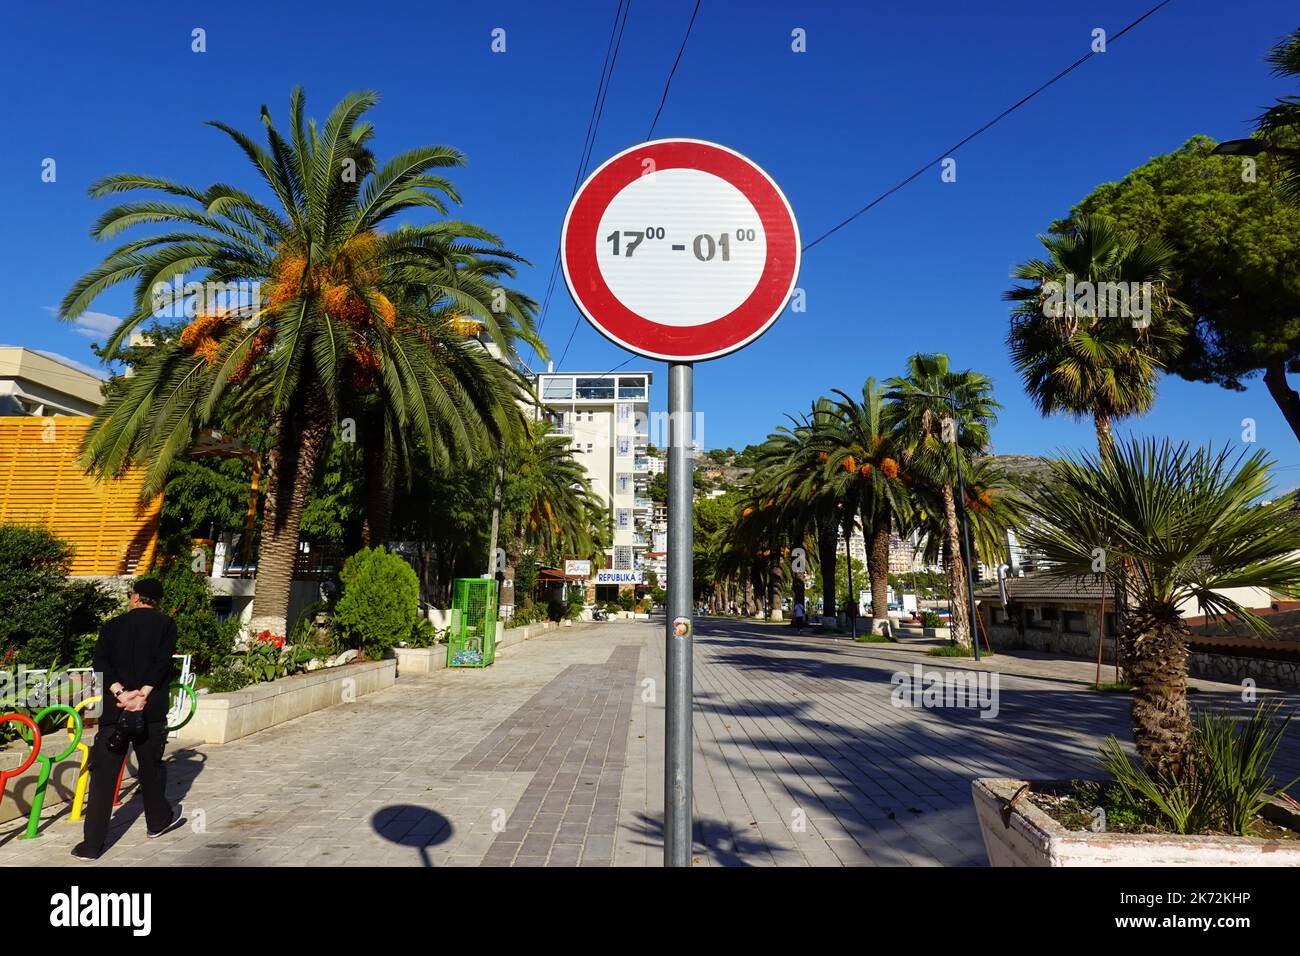 Traffic sign no entry, promenade, Saranda, Republic of Albania Stock Photo